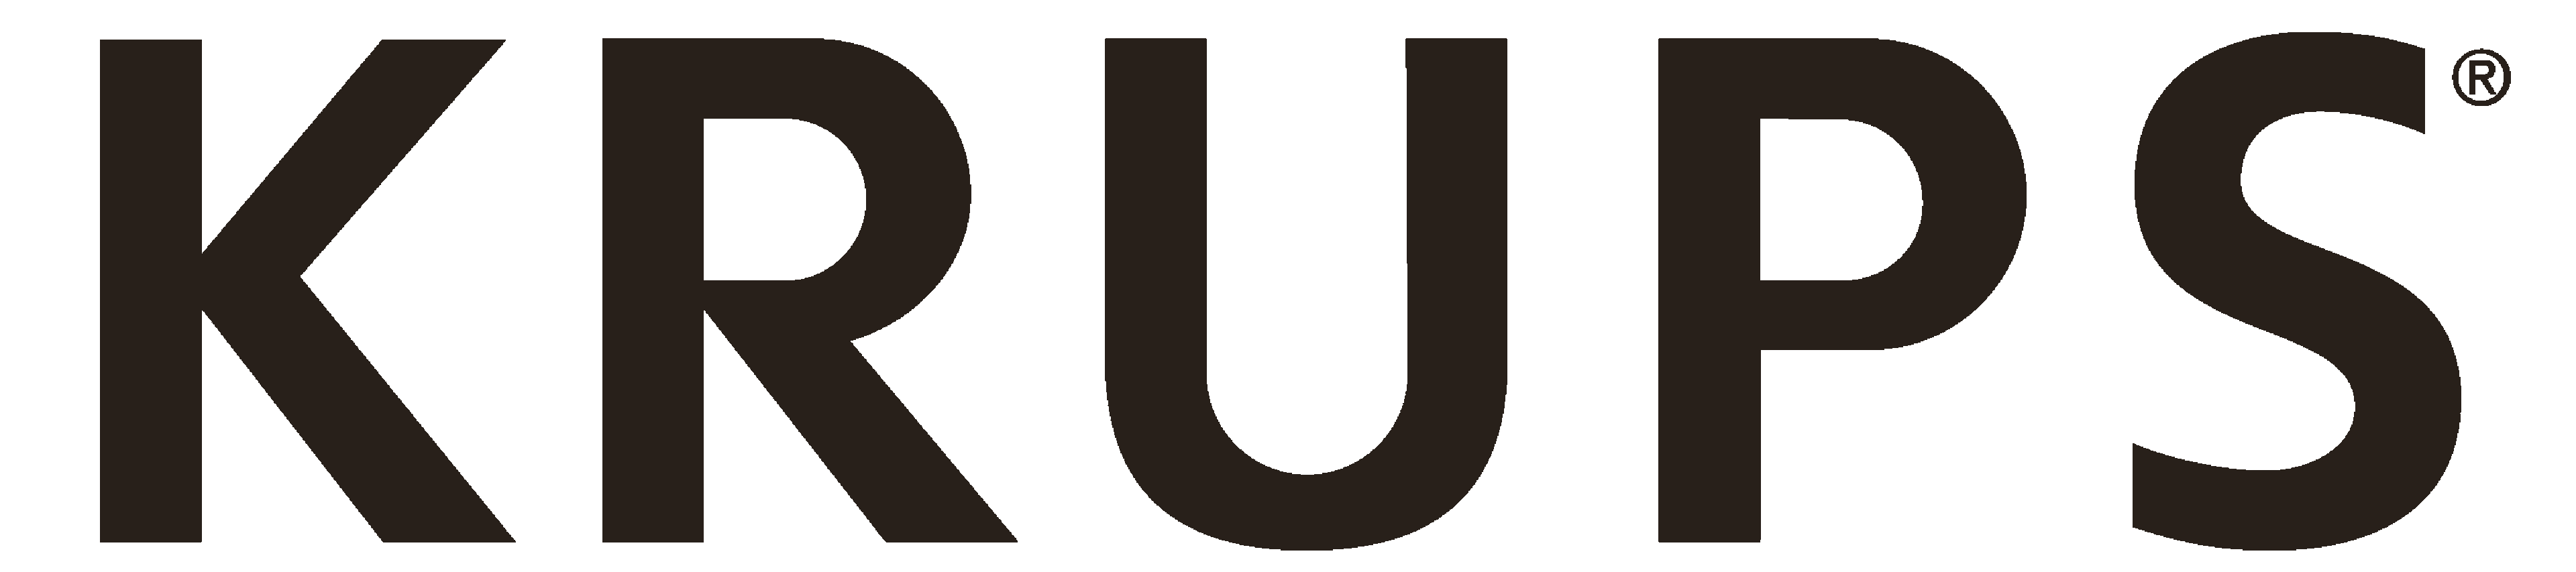 Krups logo